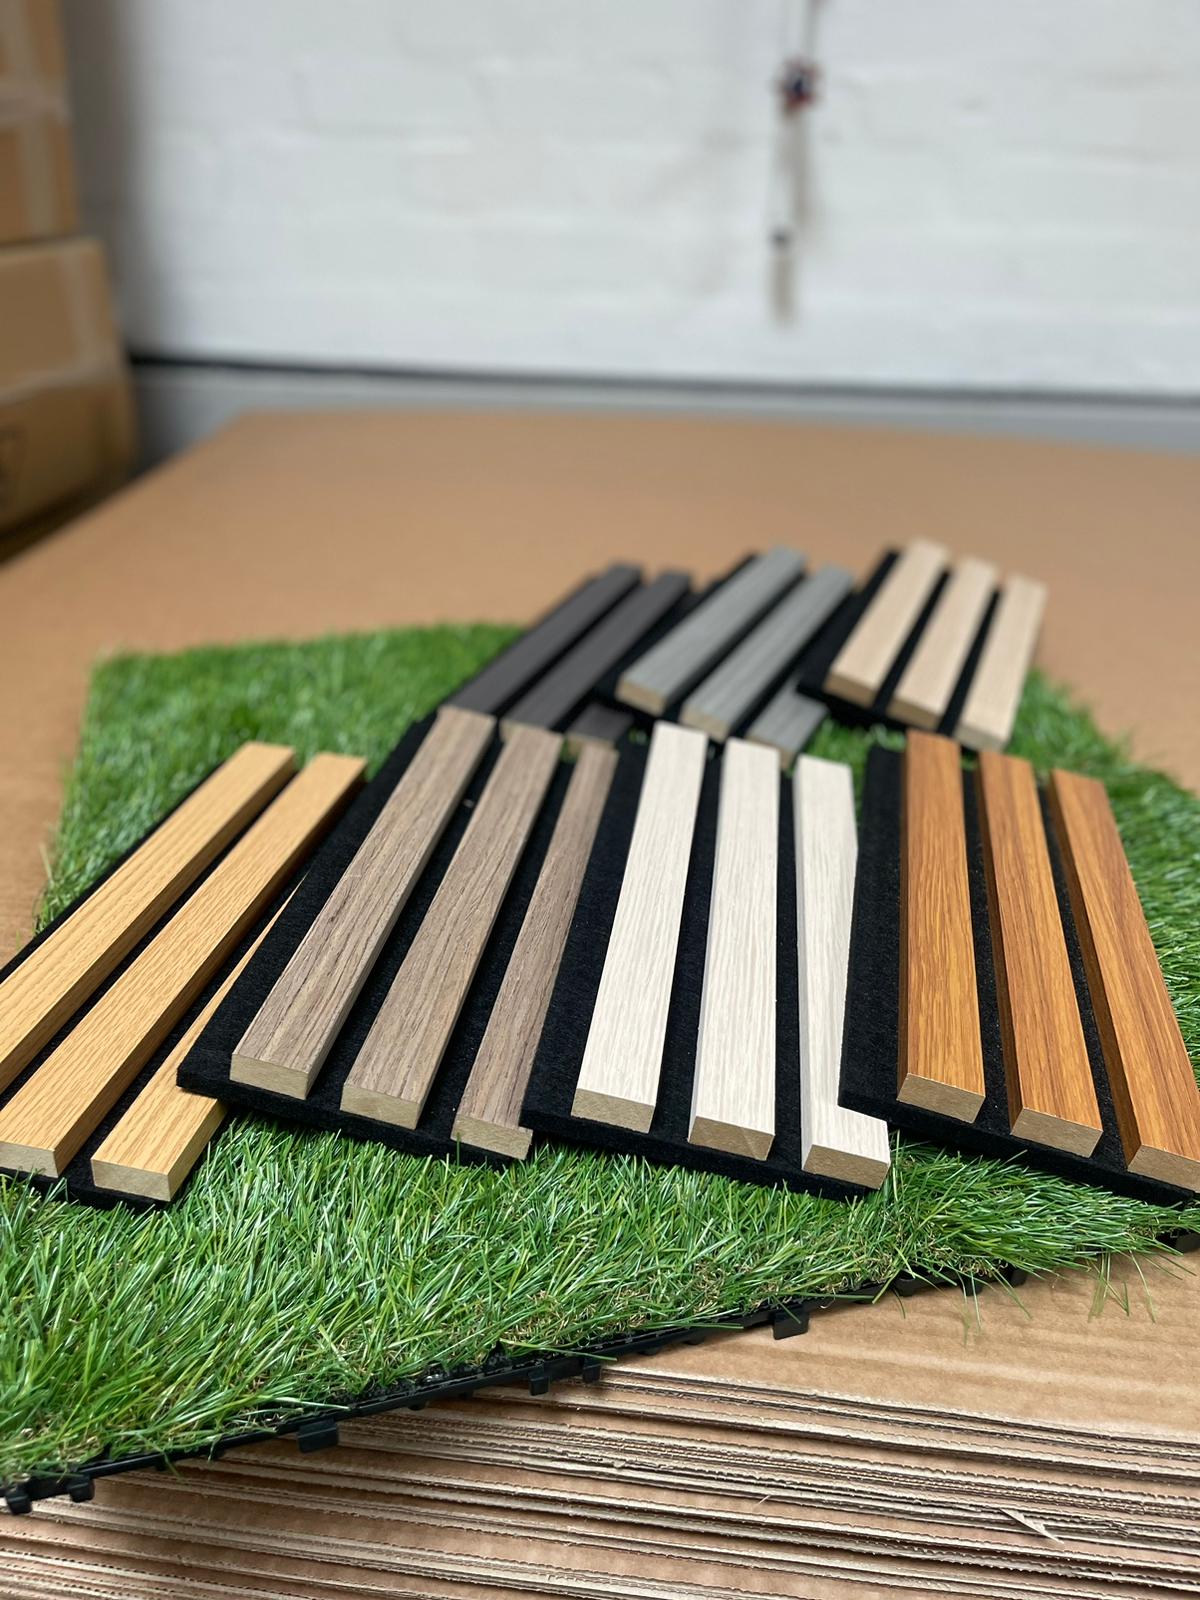 Sample Product 30x12.5x2.1 cm Golden Oak Acoustic Wood Wall Panels